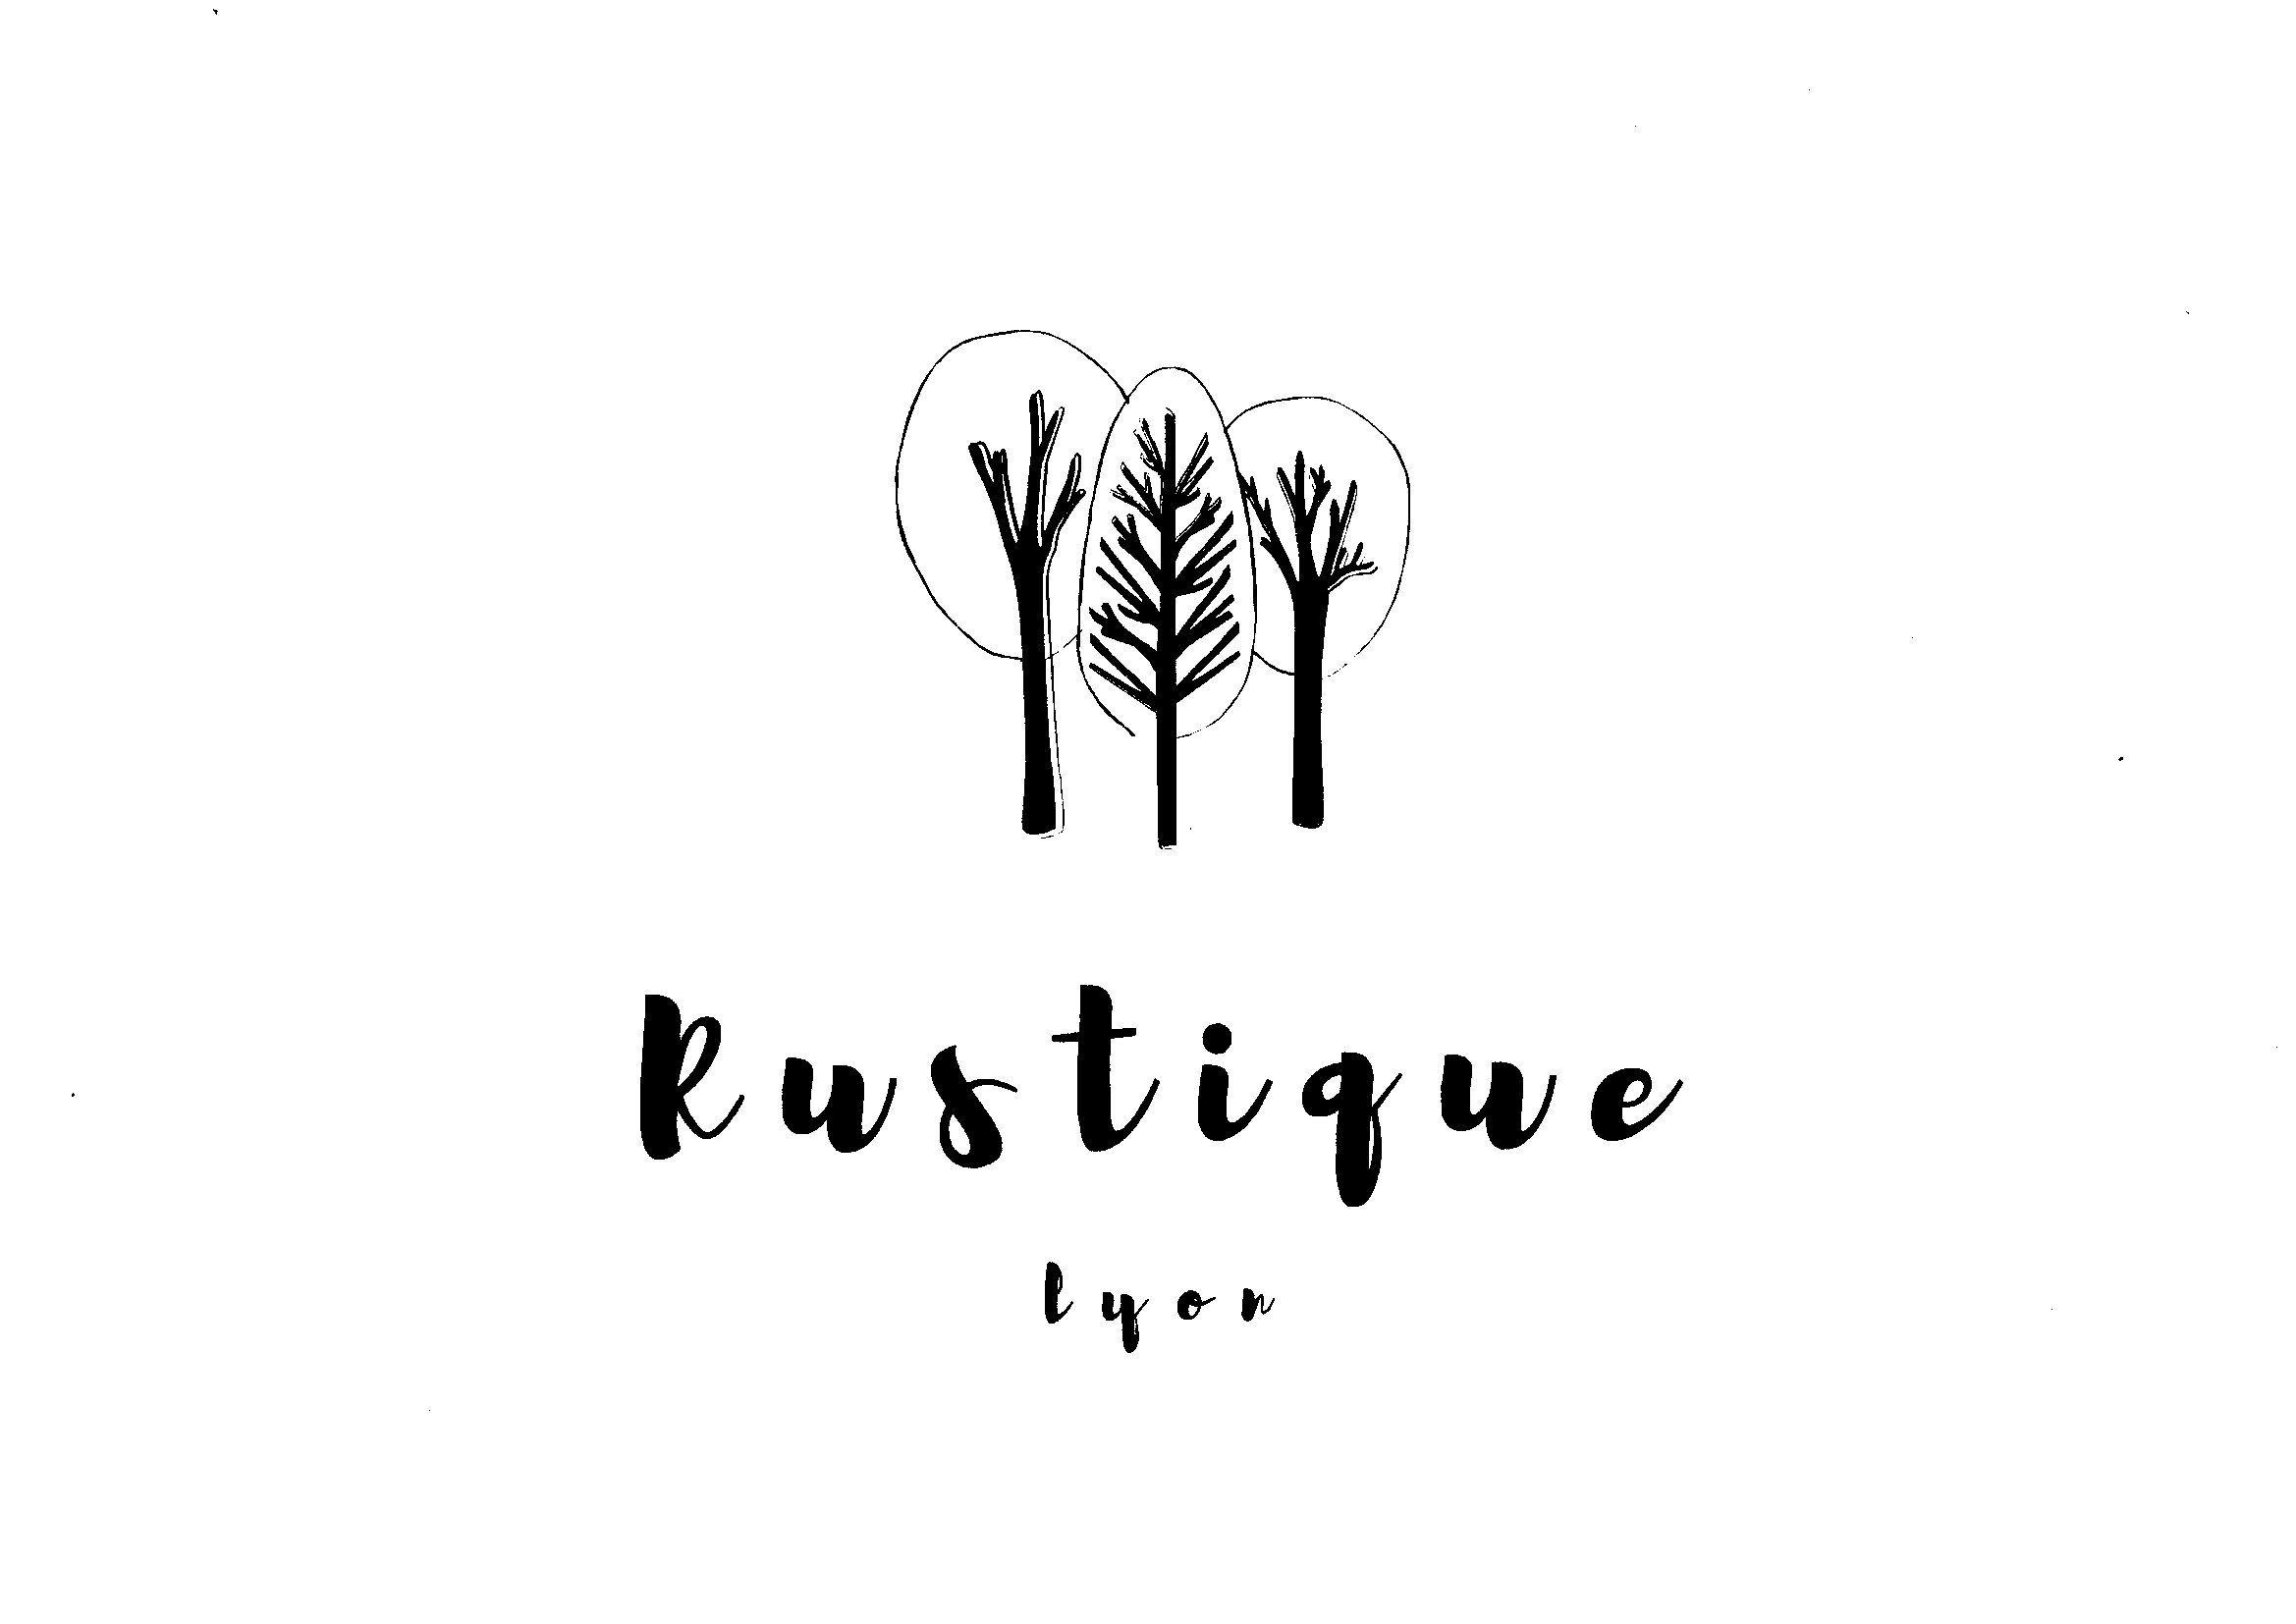 Logo Rustique